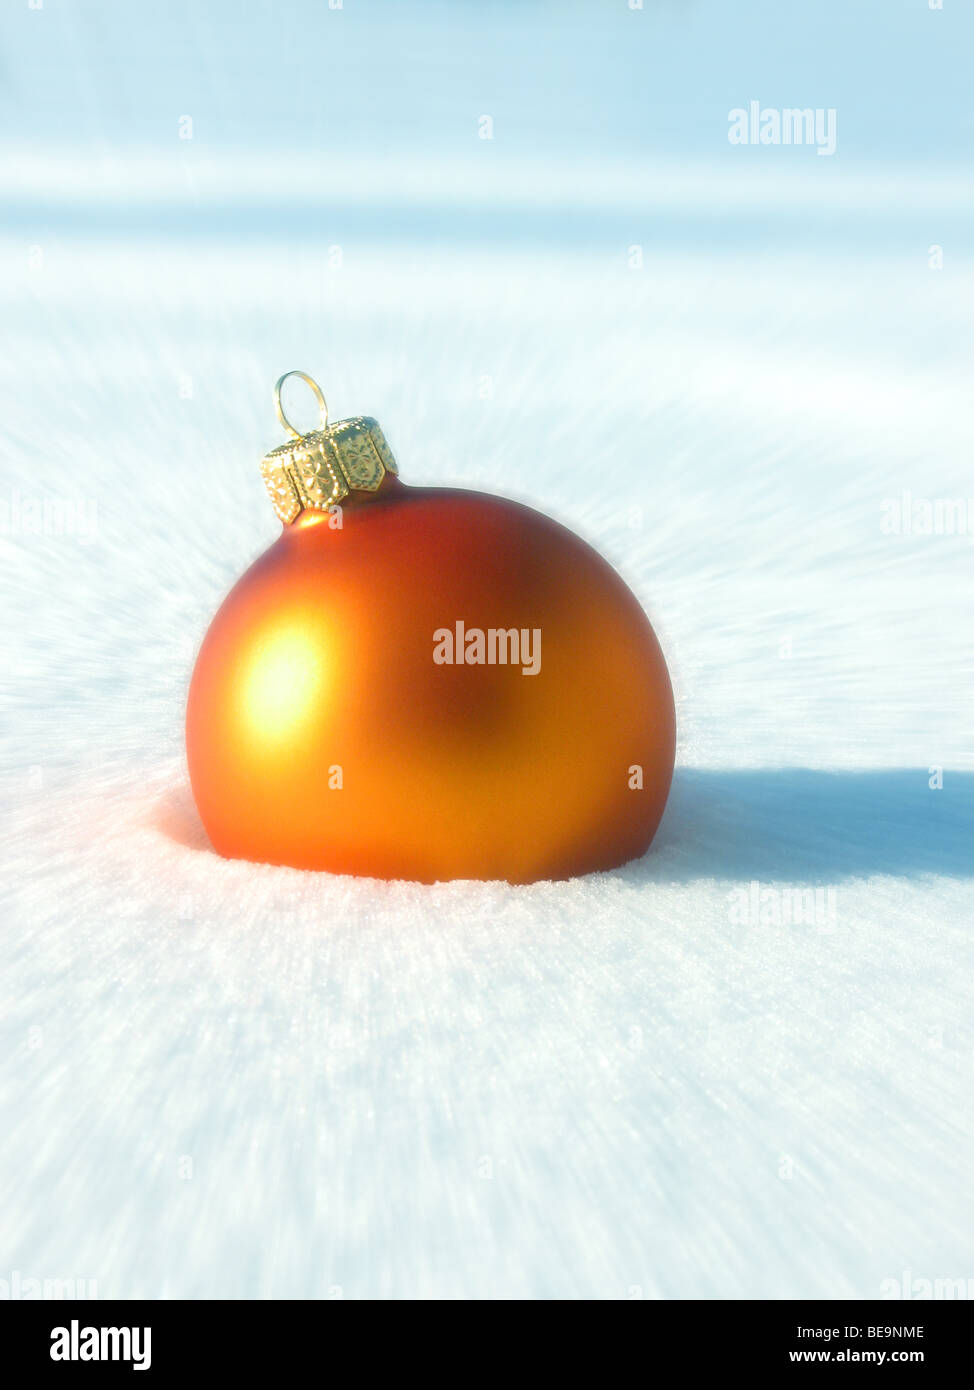 Bola de Navidad naranja ornamento en la nieve - Orangene Christbaumkugel im Schnee Foto de stock